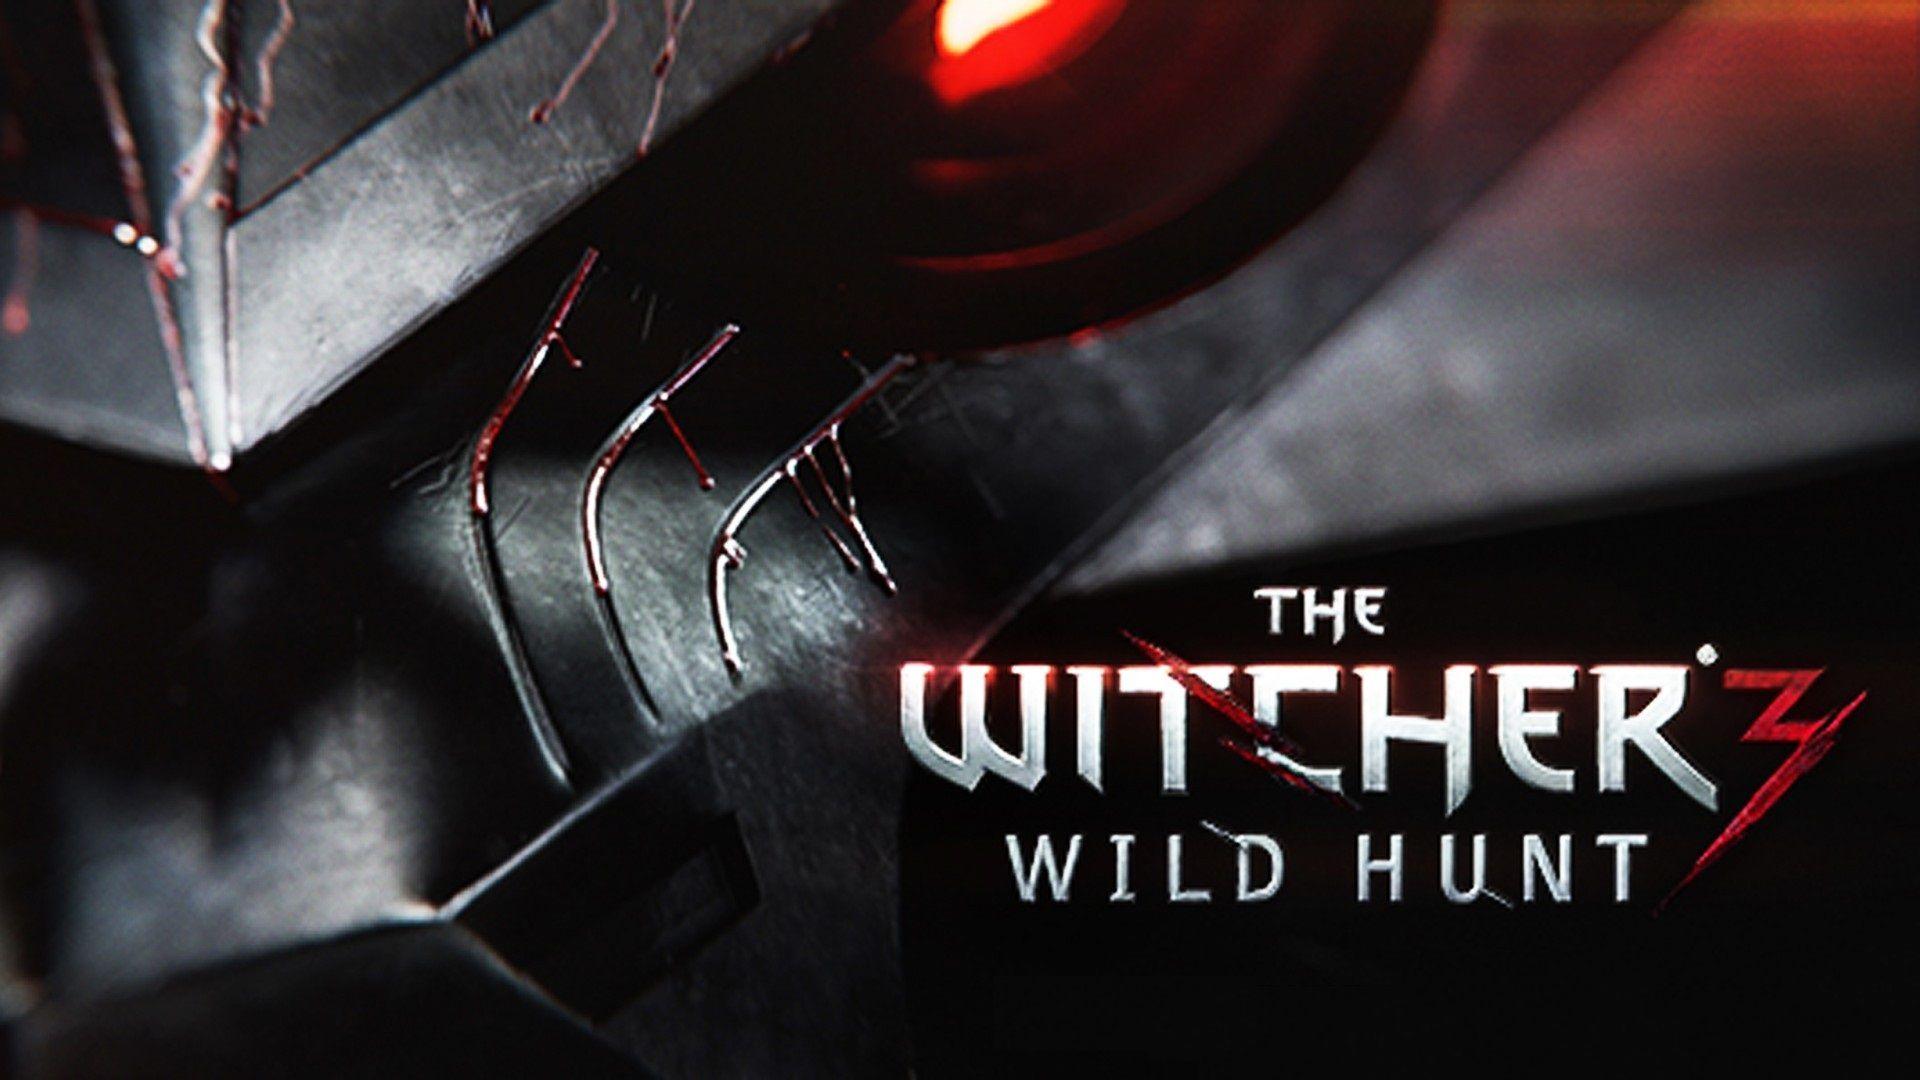 The Witcher 3 Wild Hunt Wallpaper, Best & Inspirational High